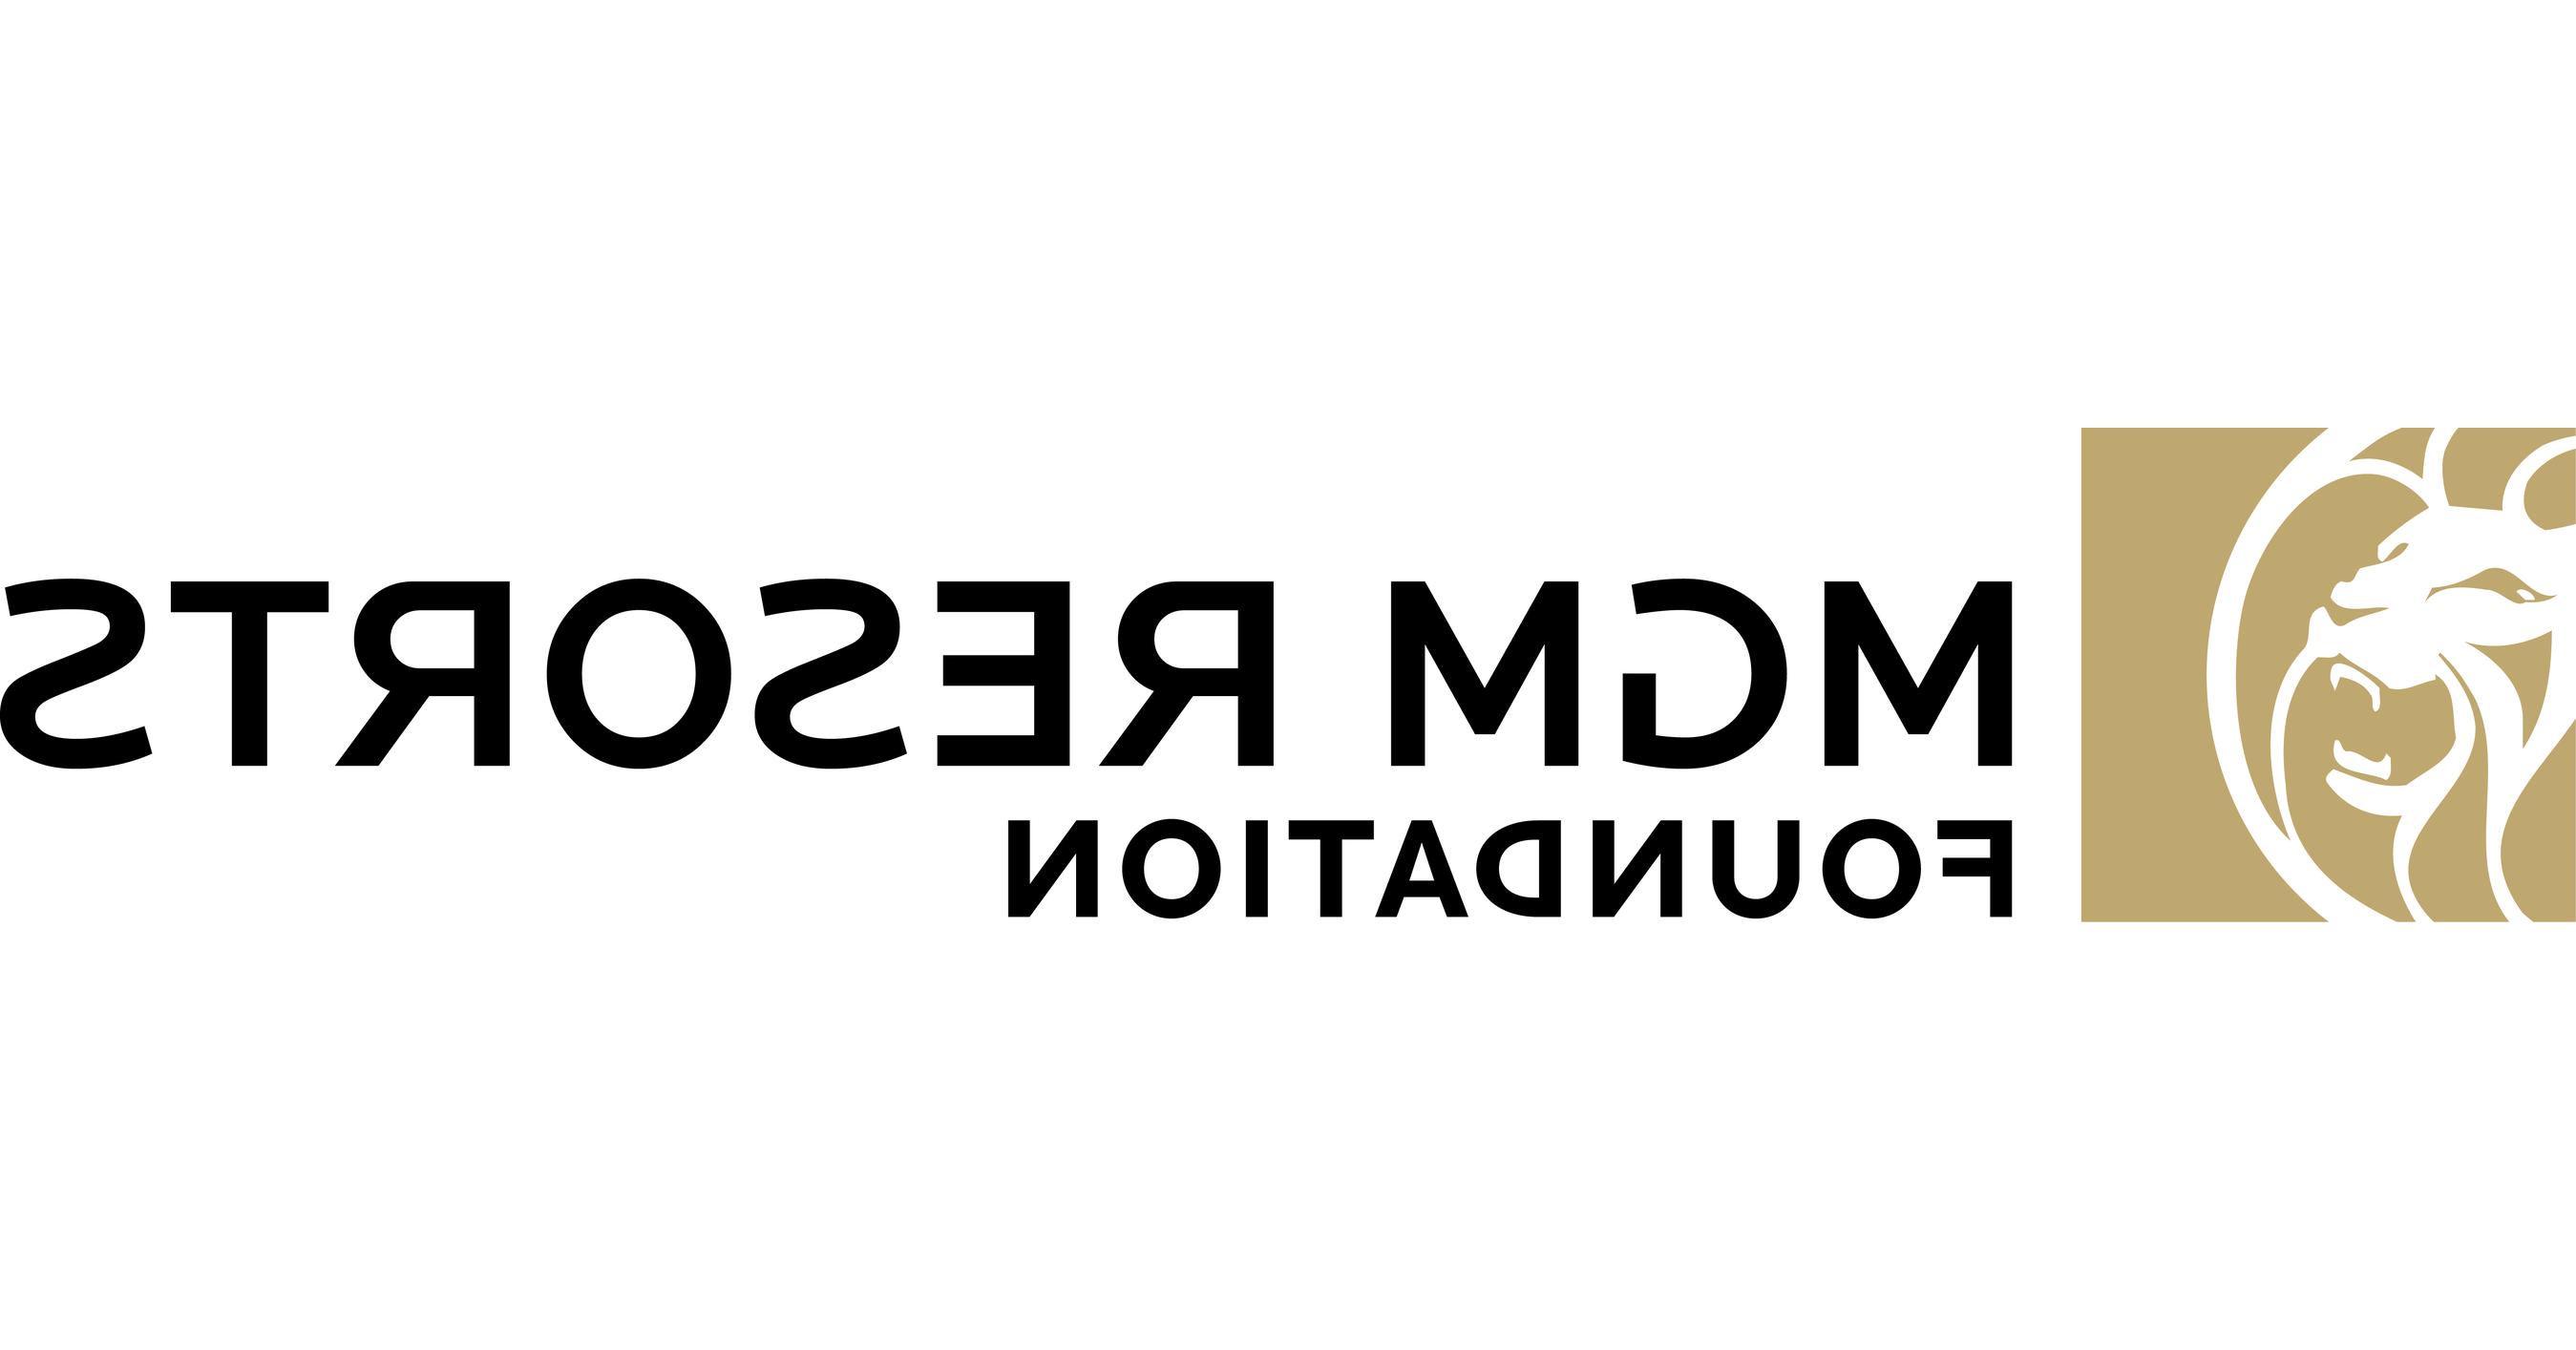 mgm resorts foundation logo